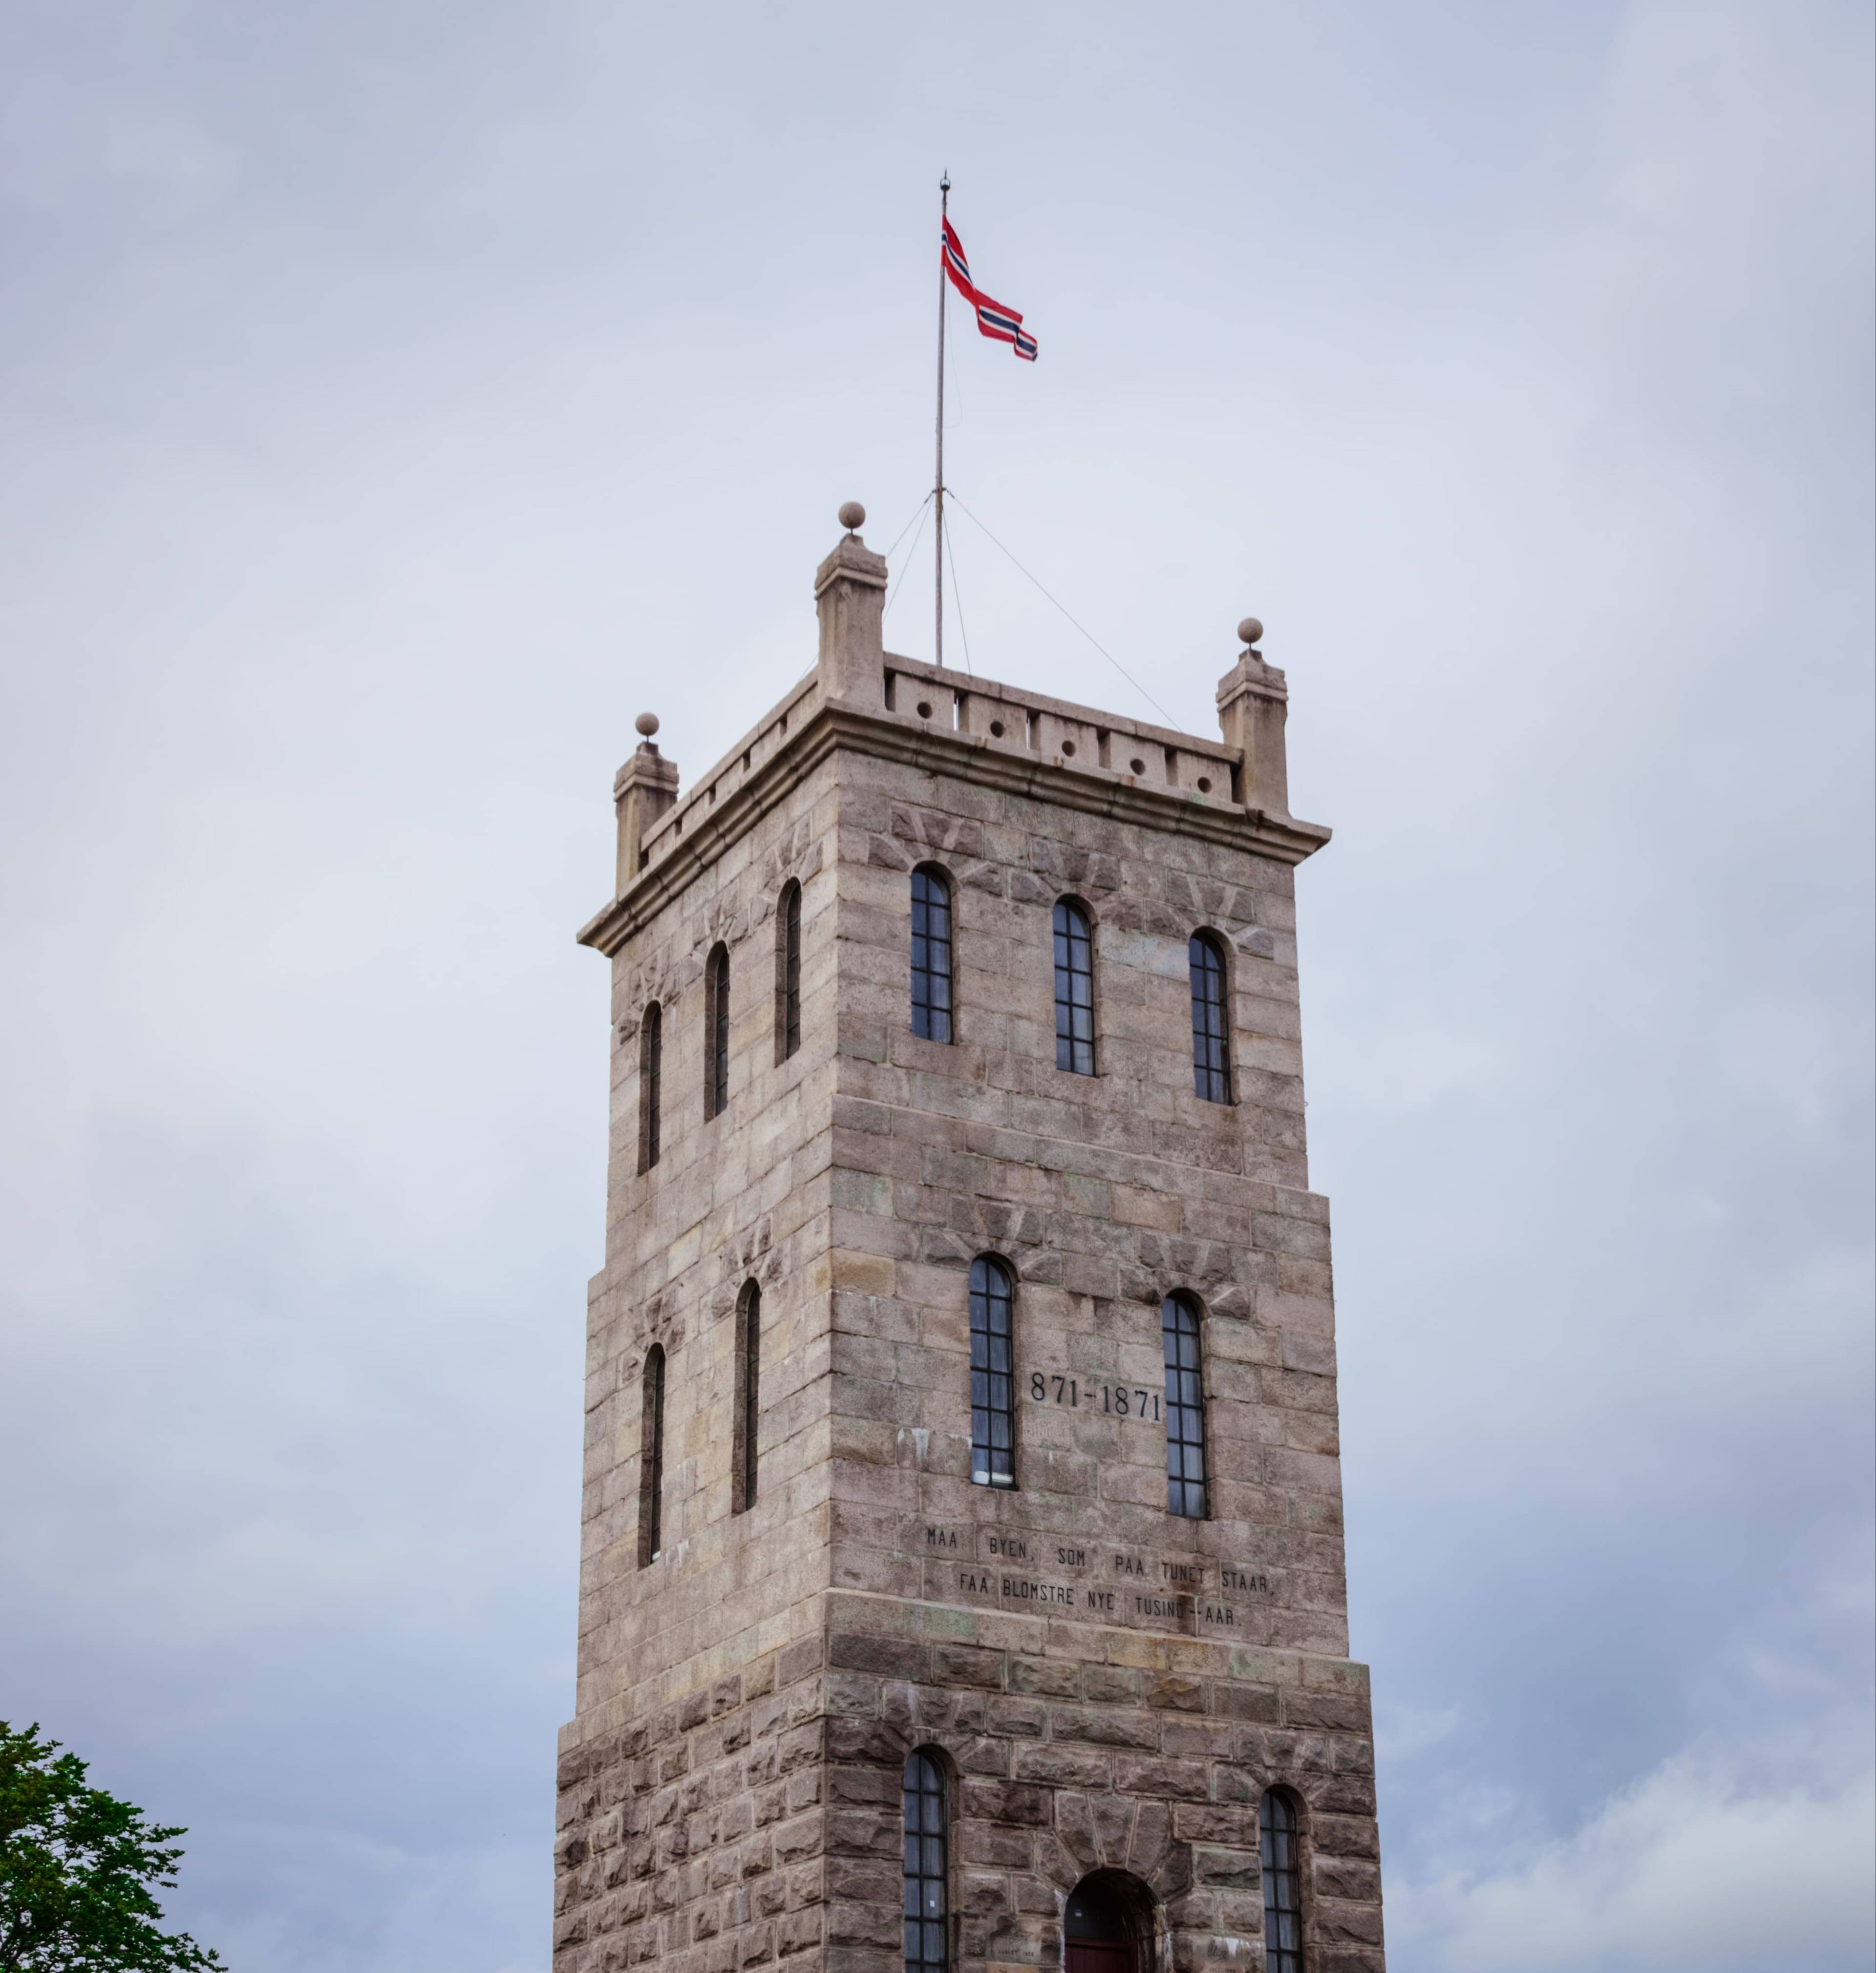 Slottsfjellet Turm